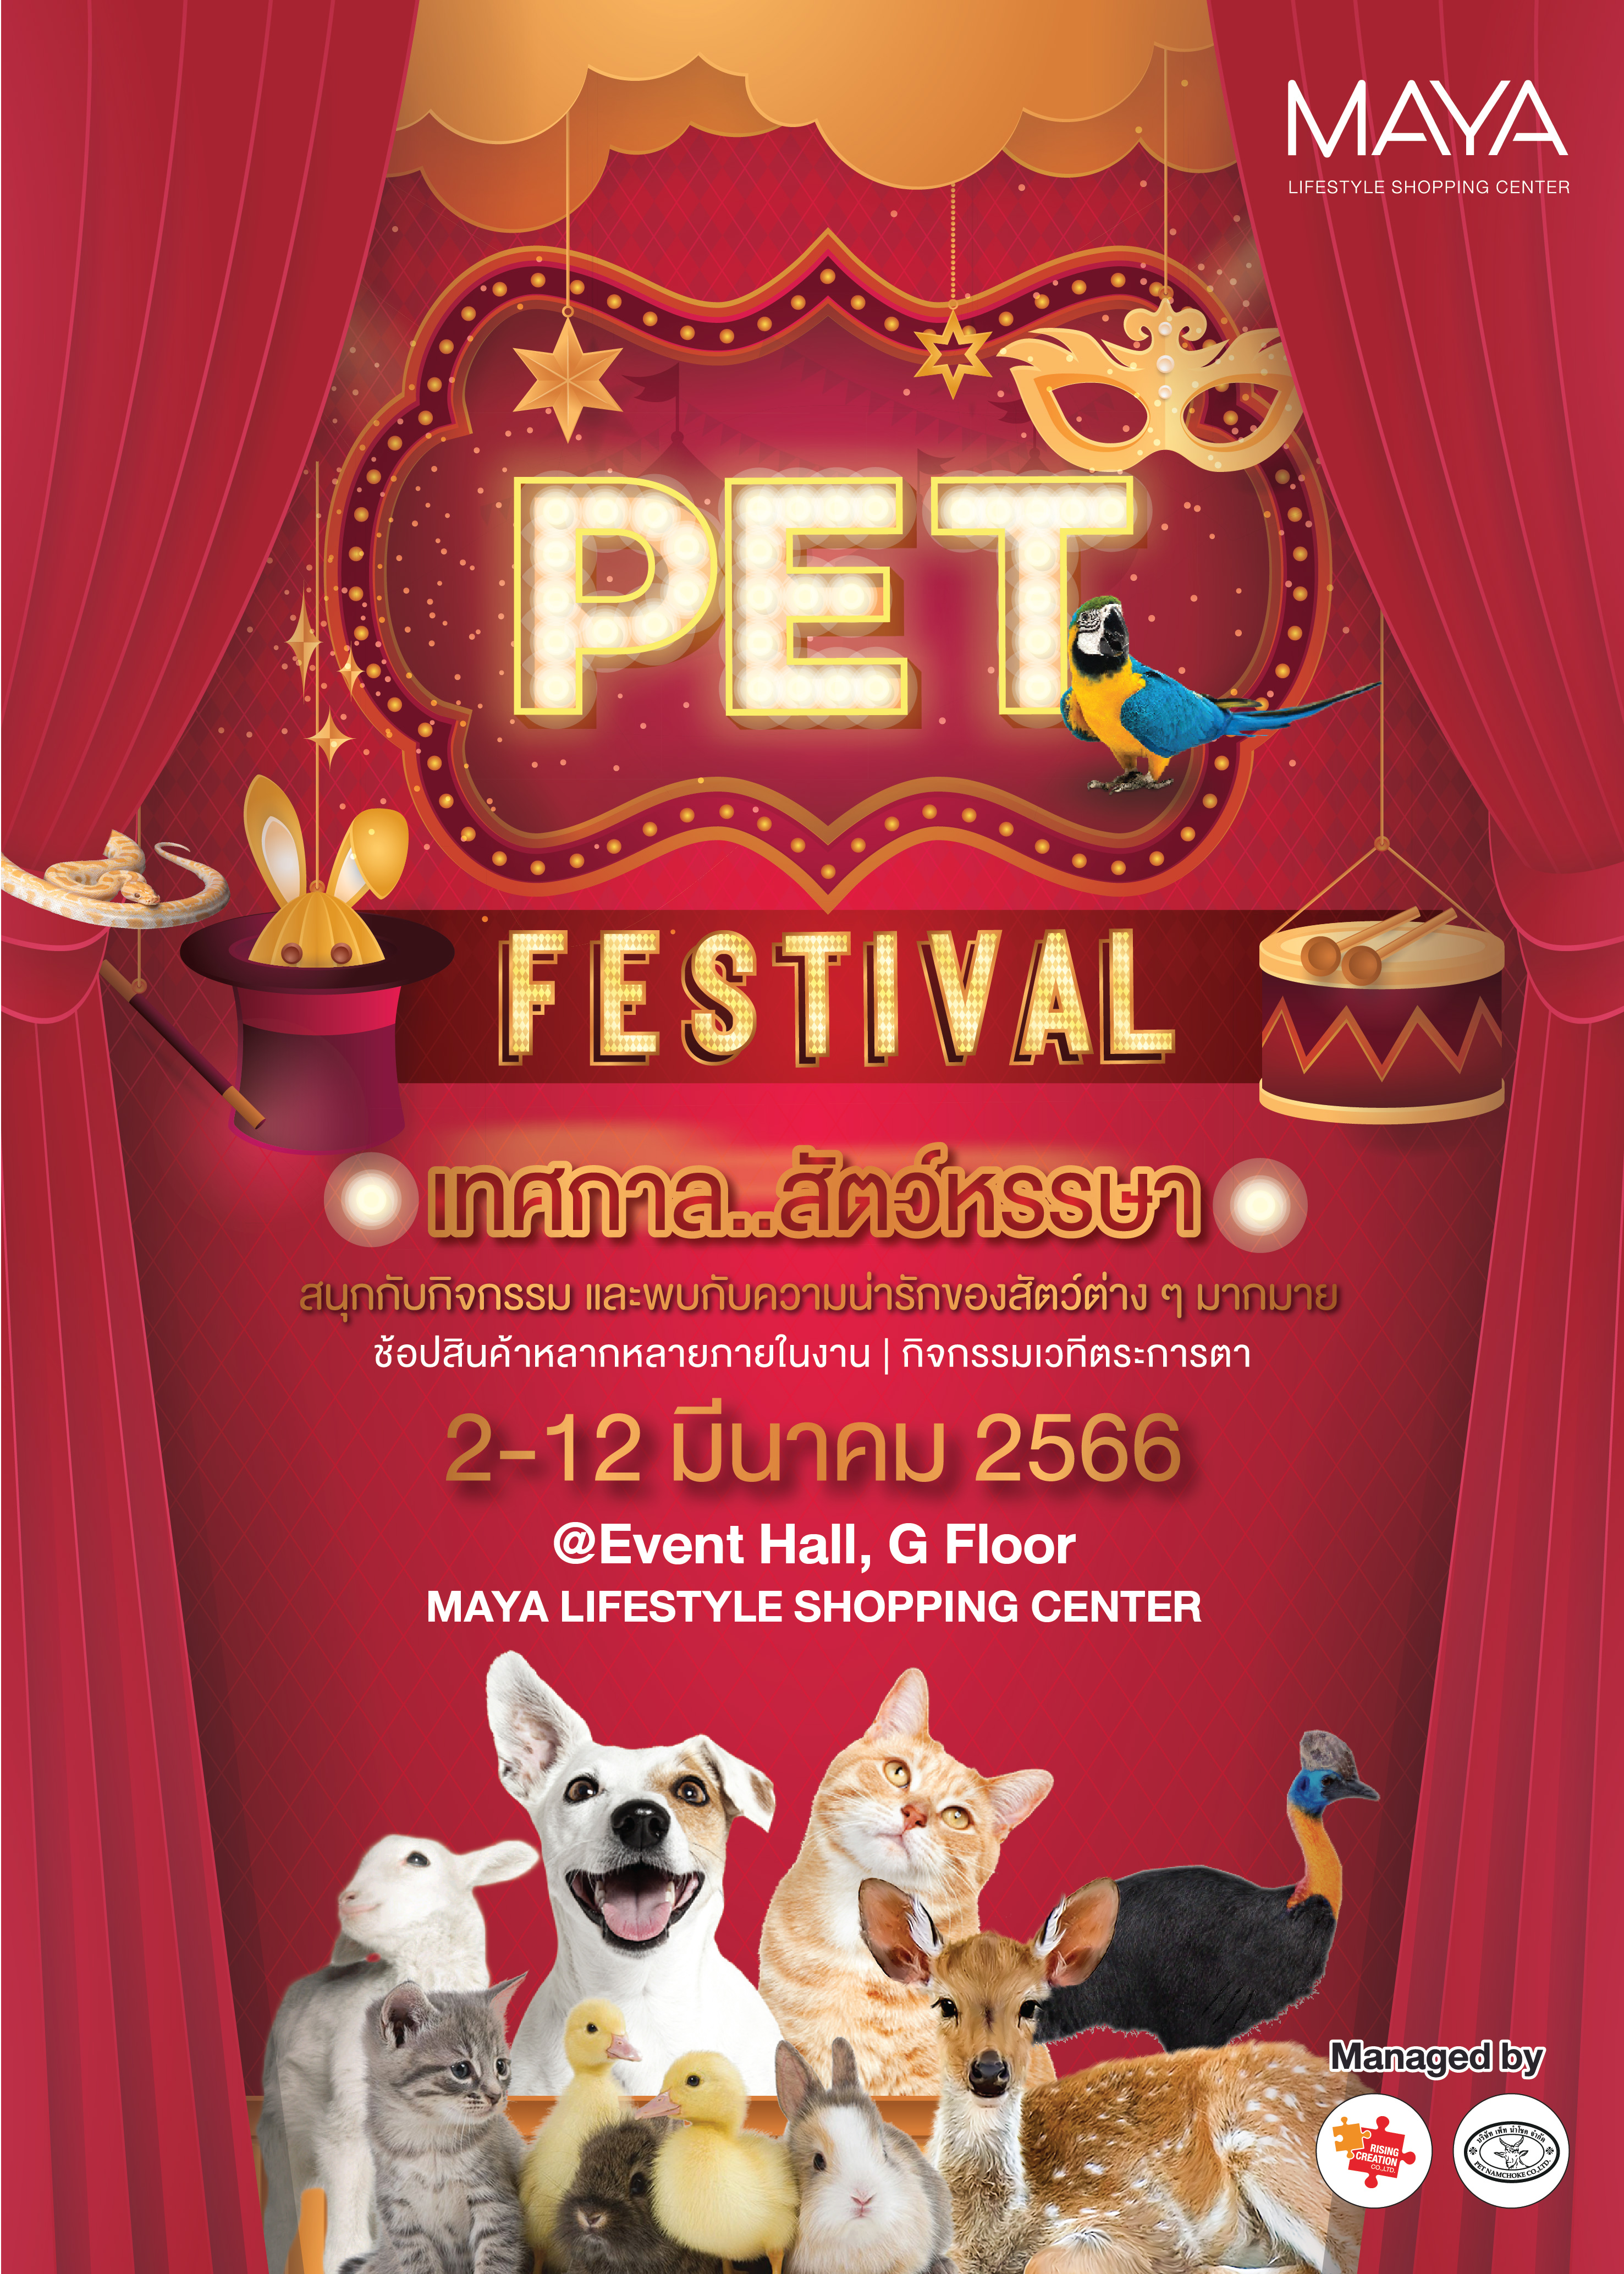  “PET FESTIVAL” เทศกาลสัตว์หรรษามหาสนุก